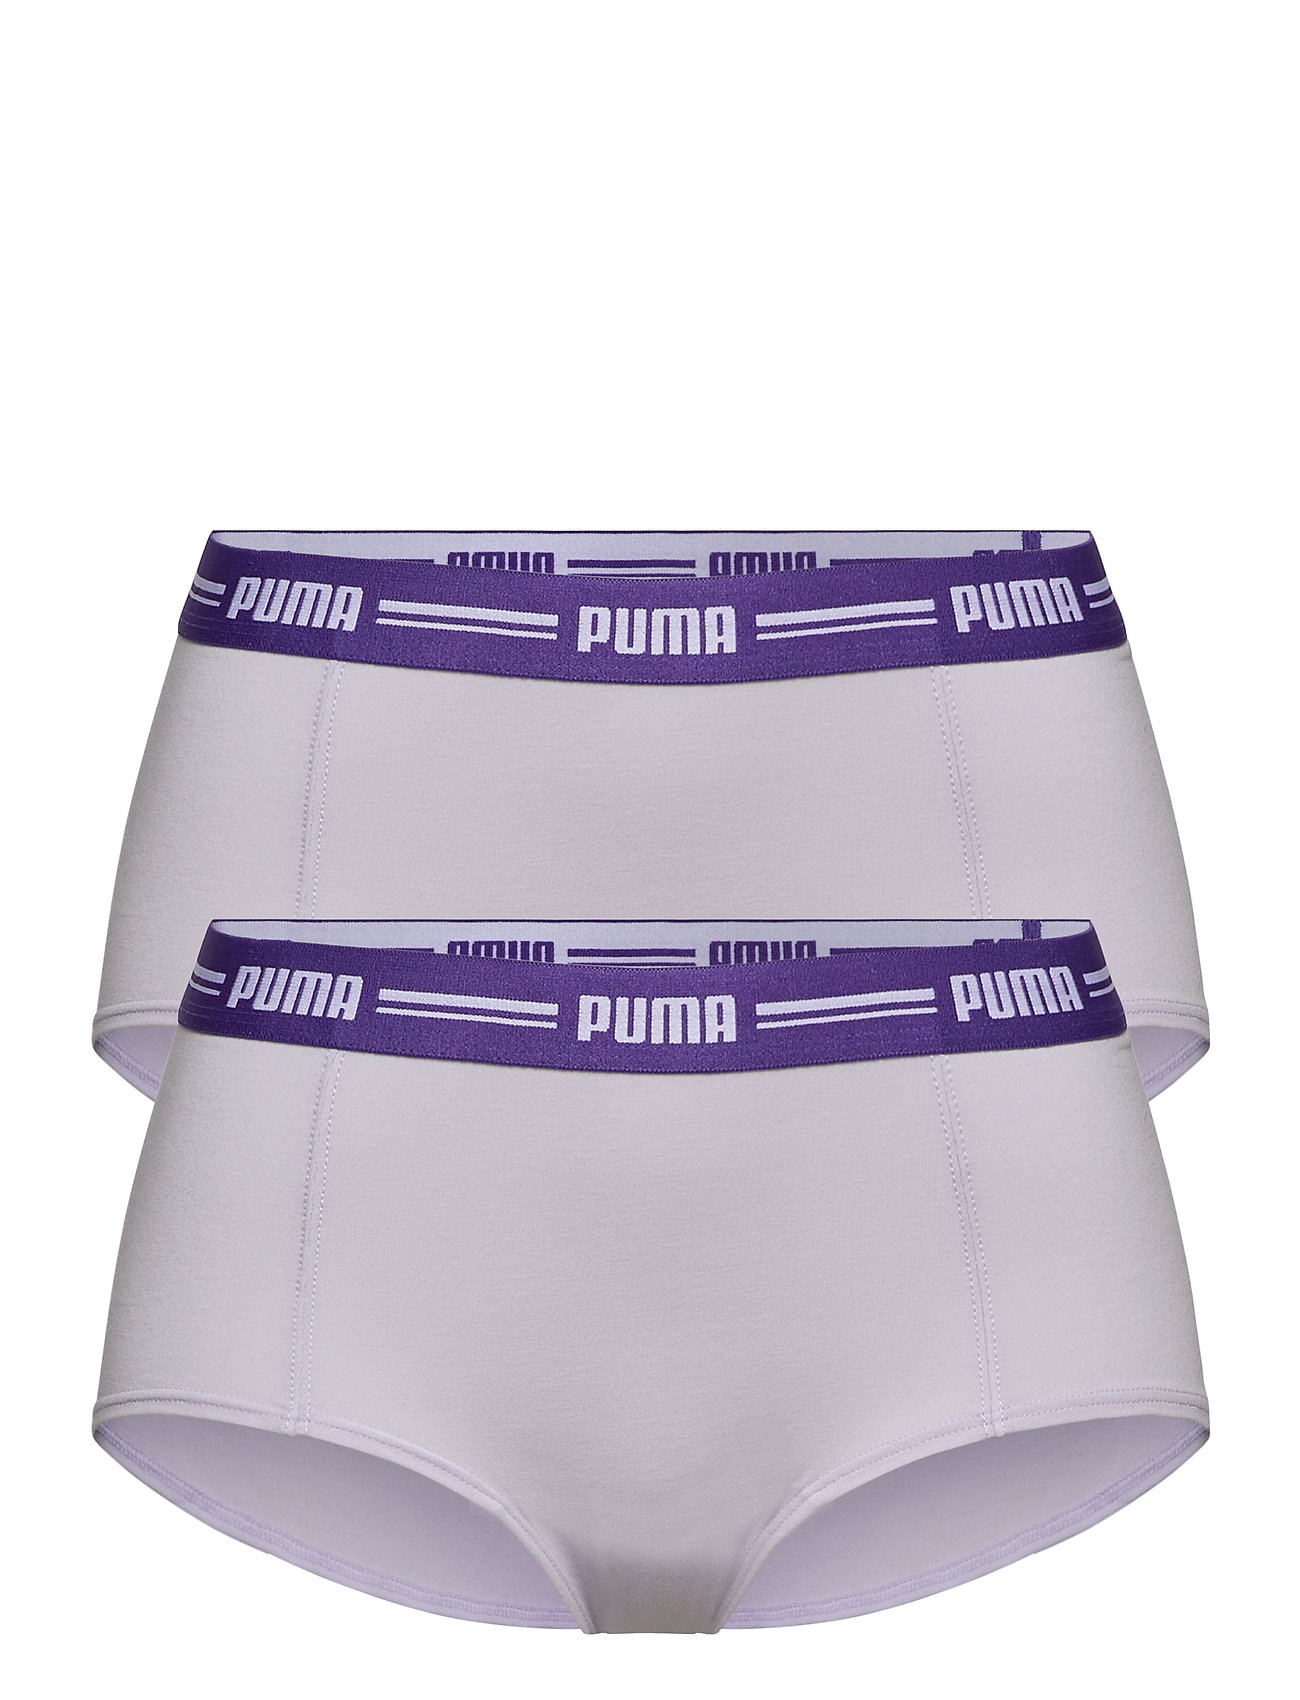 puma iconic mini short